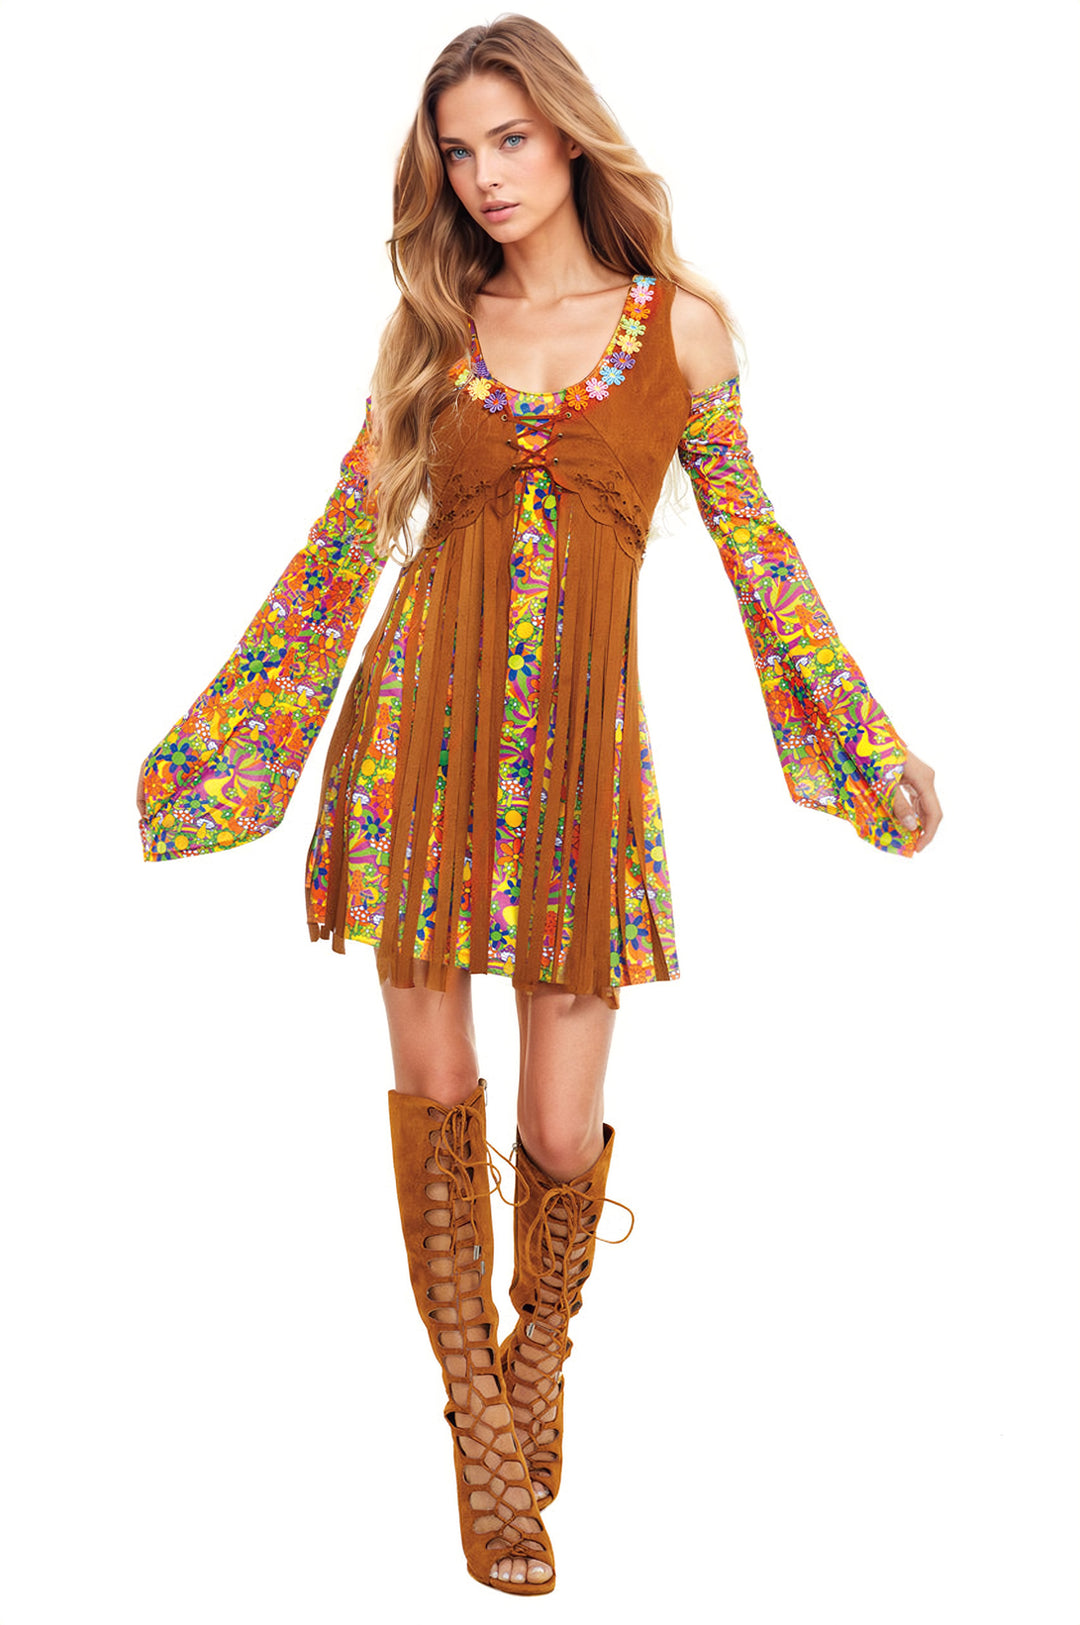 Women's Sexy Hippie Costume – Delightfully Vixen